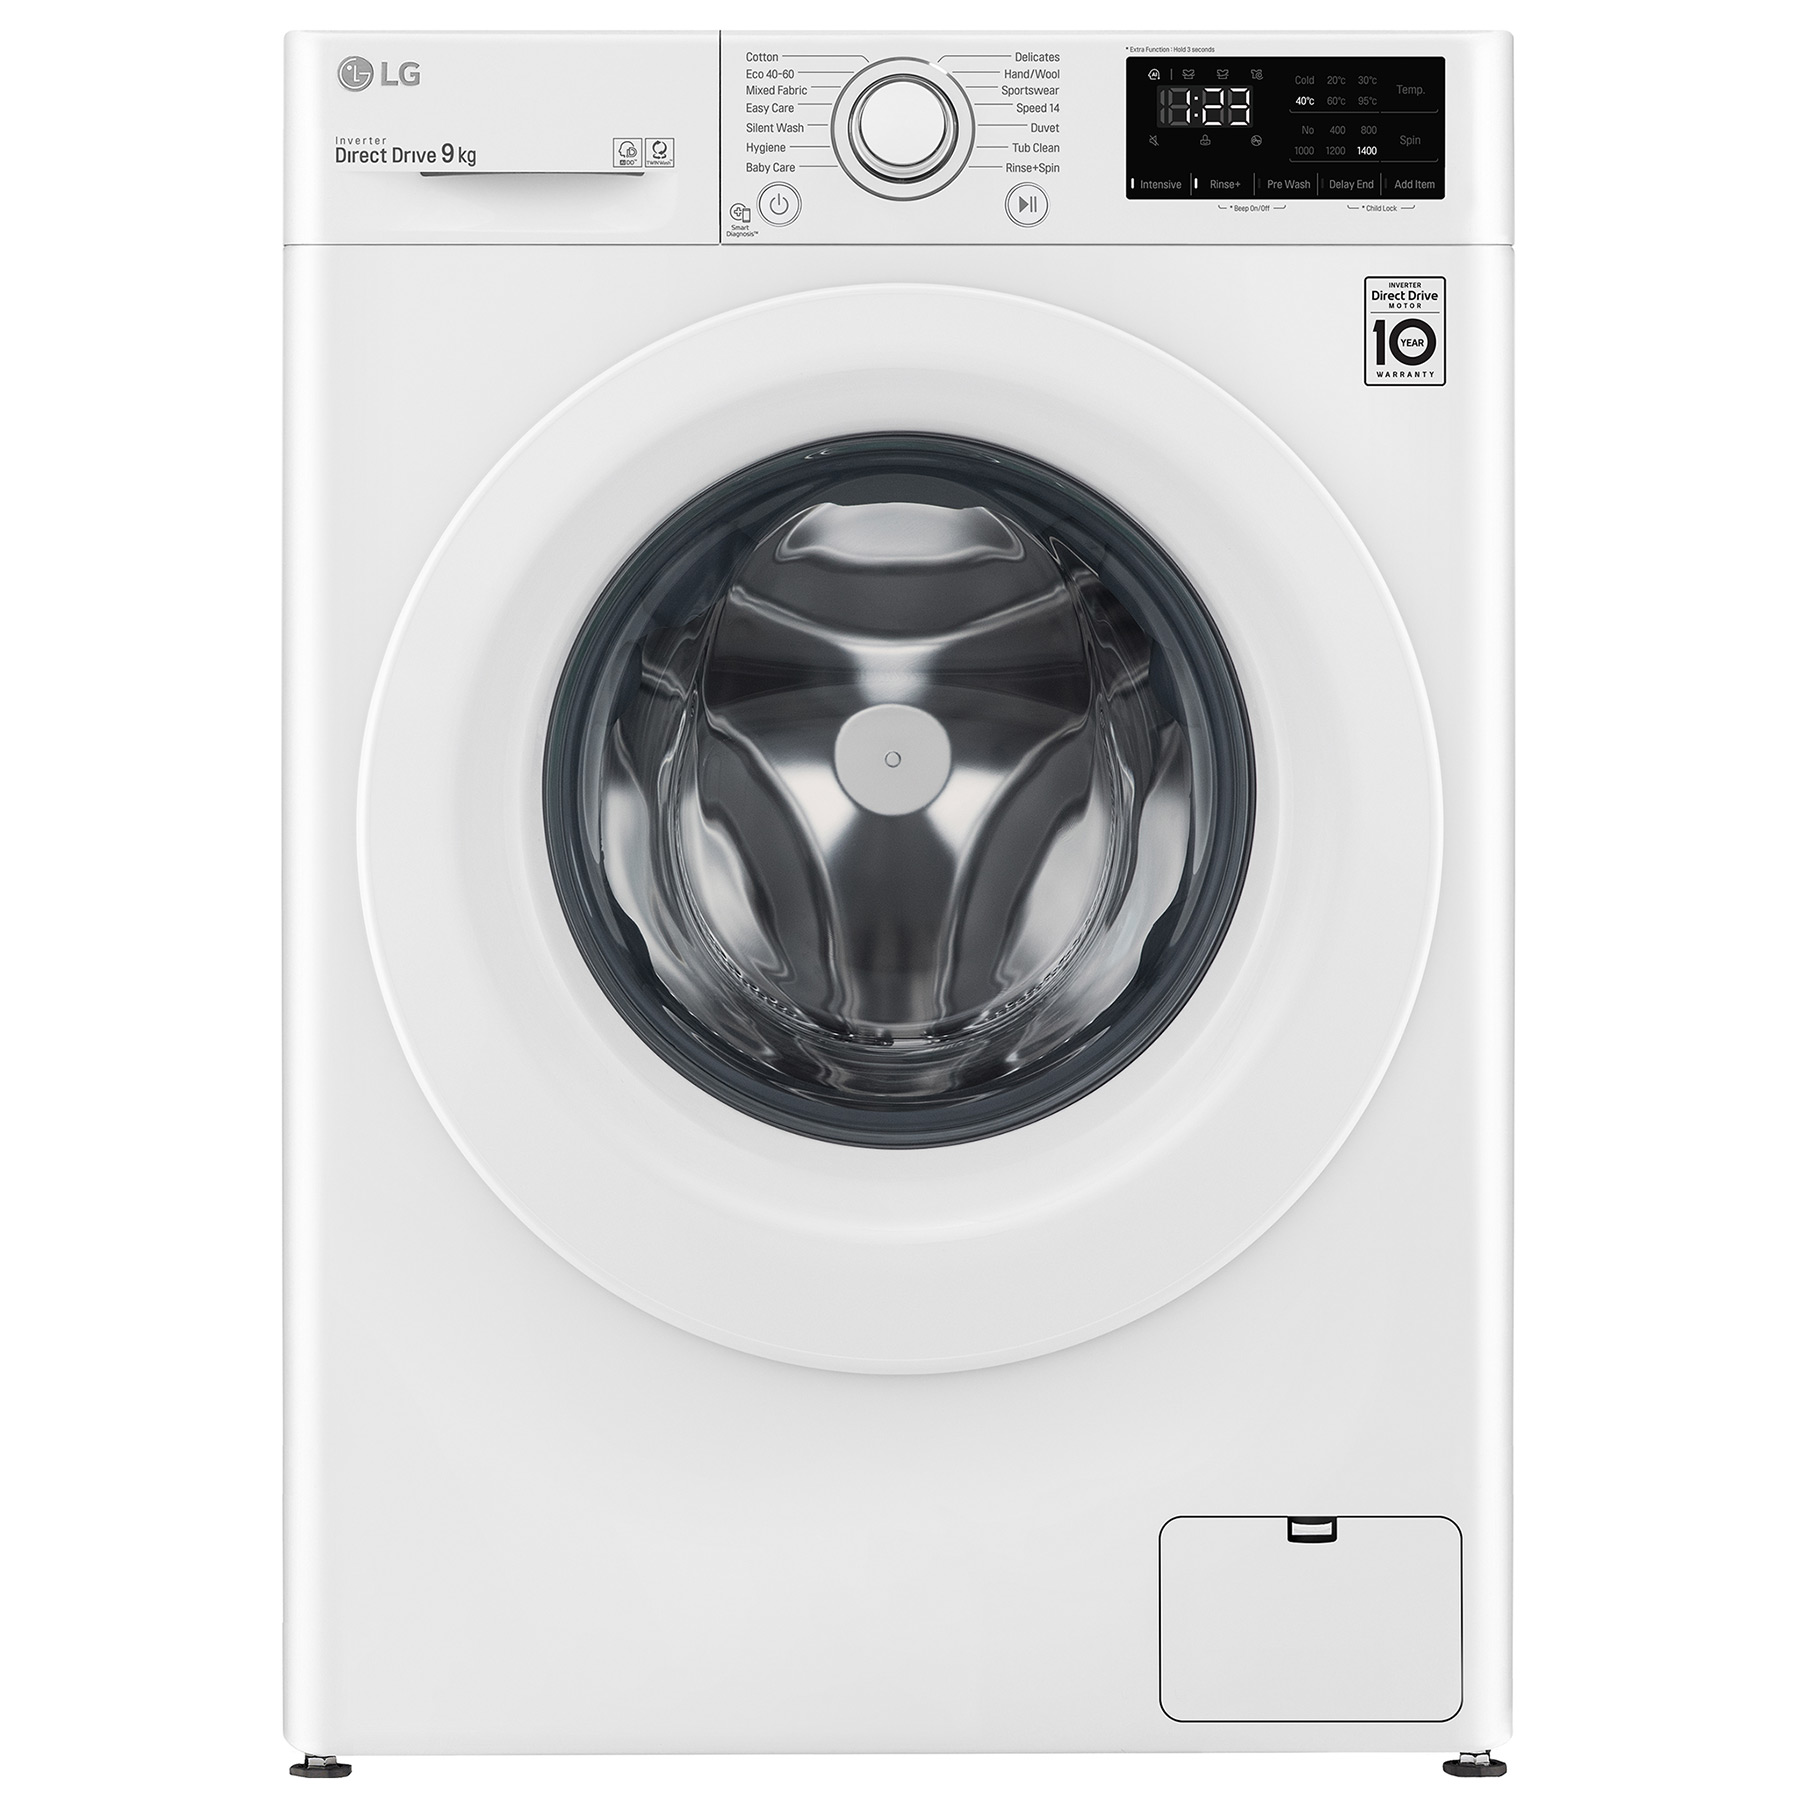 LG F4V309WNW Washing Machine in White 1400rpm 9kg B Rated